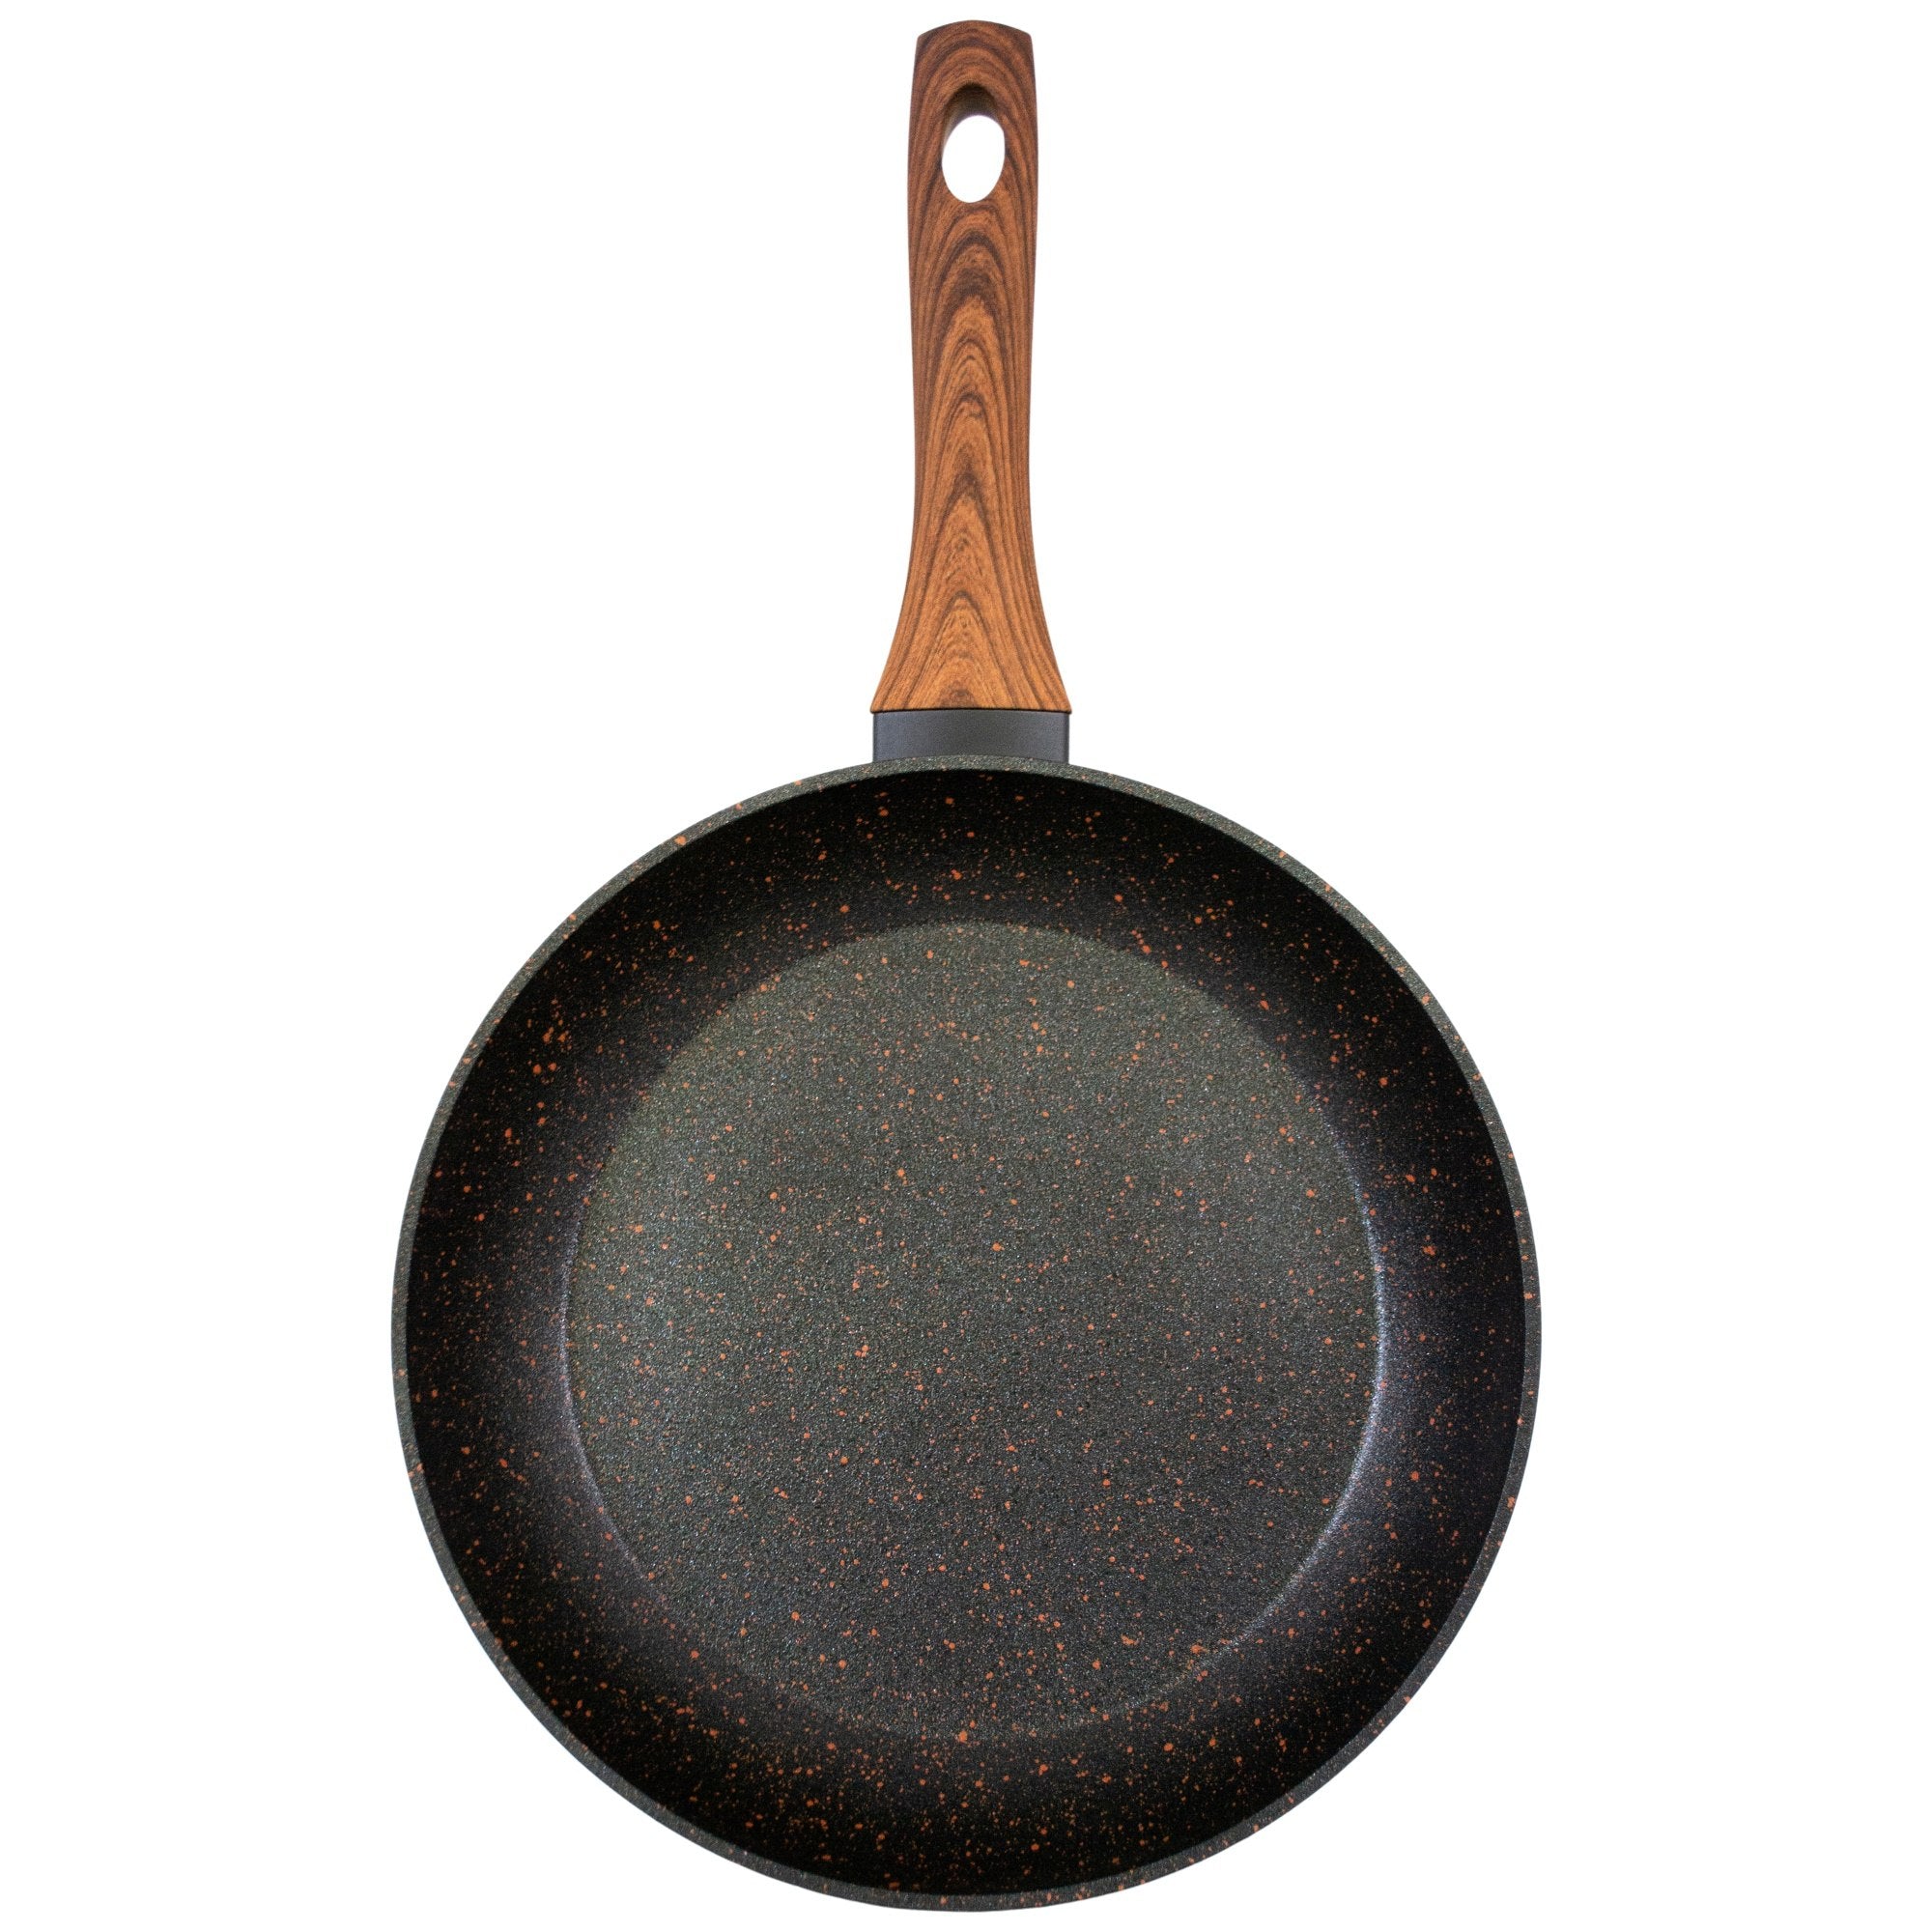 Frying pan 28 cm RockWood 